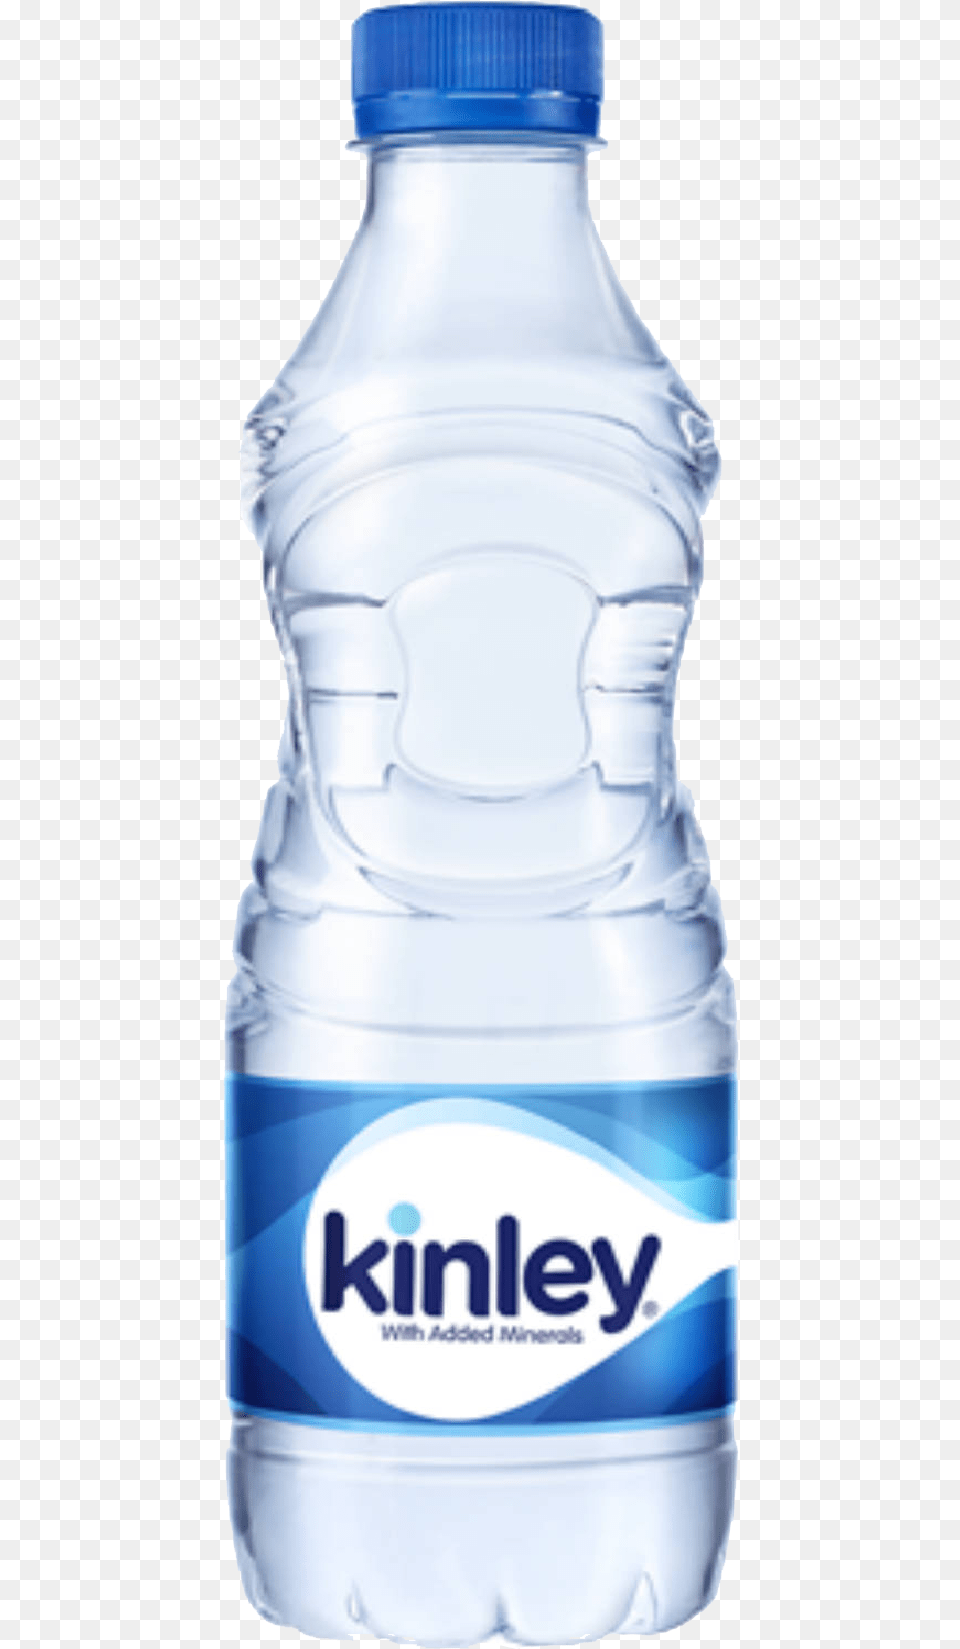 Water Bottle Image Kinley Water Bottle, Water Bottle, Beverage, Mineral Water, Shaker Free Png